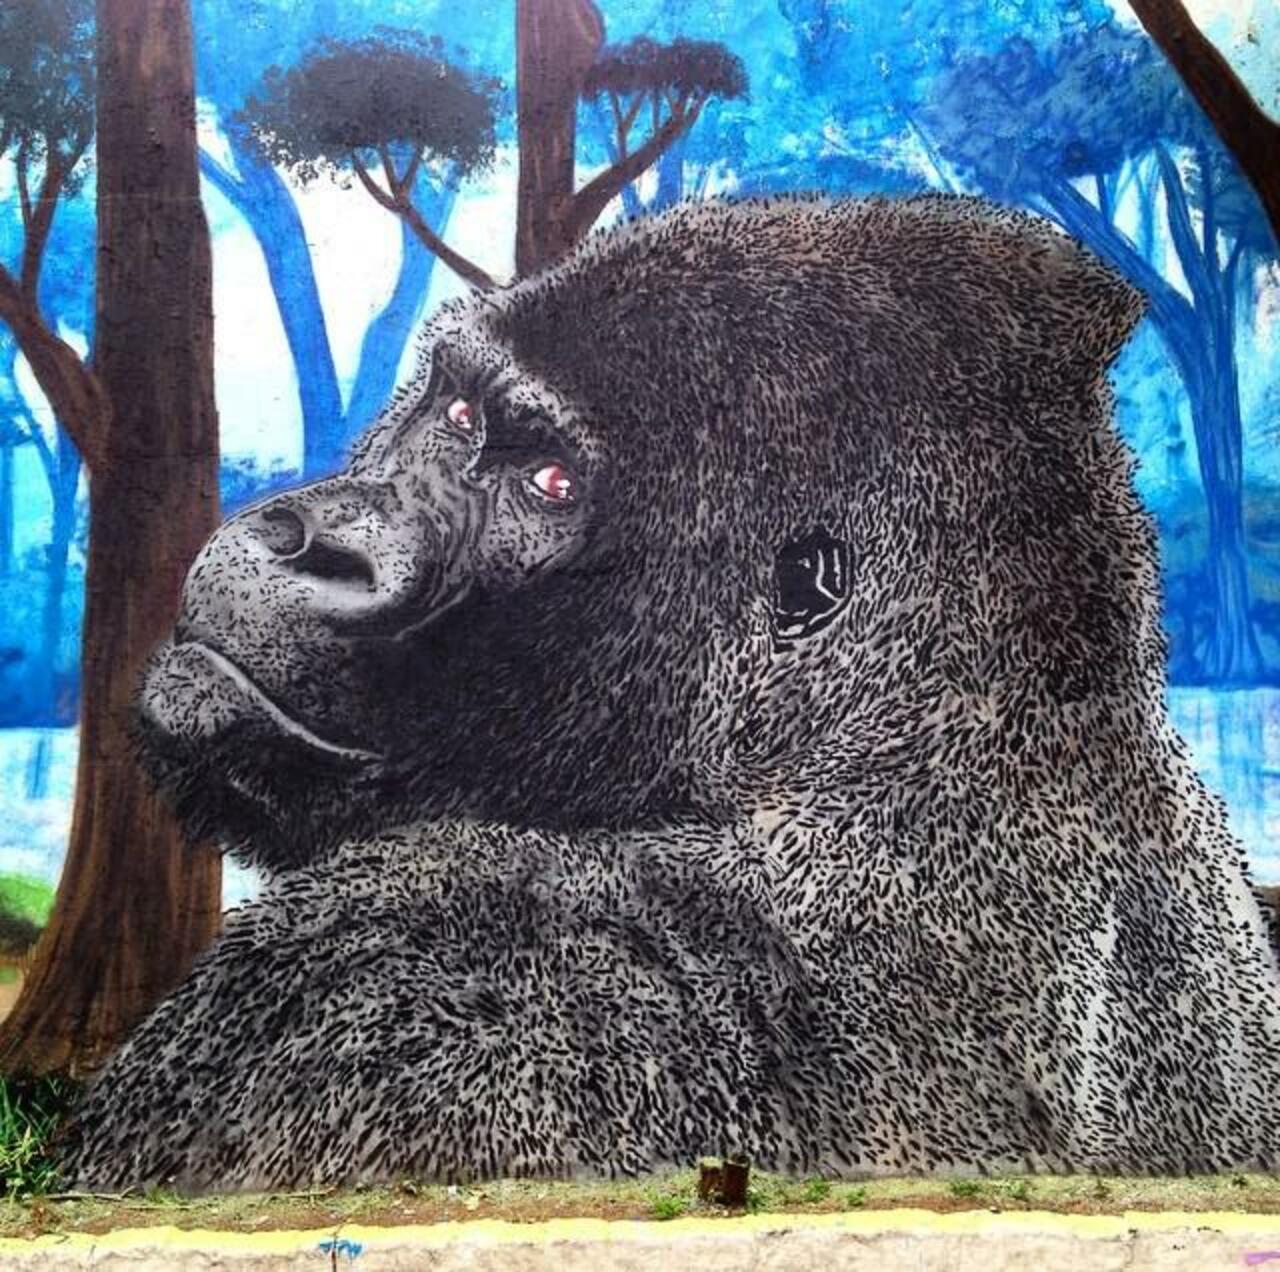 Superb Nature in Street Art piece by Thassio in São Paulo, Brazil  

#art #mural #graffiti #streetart http://t.co/Fyfohd6k1X